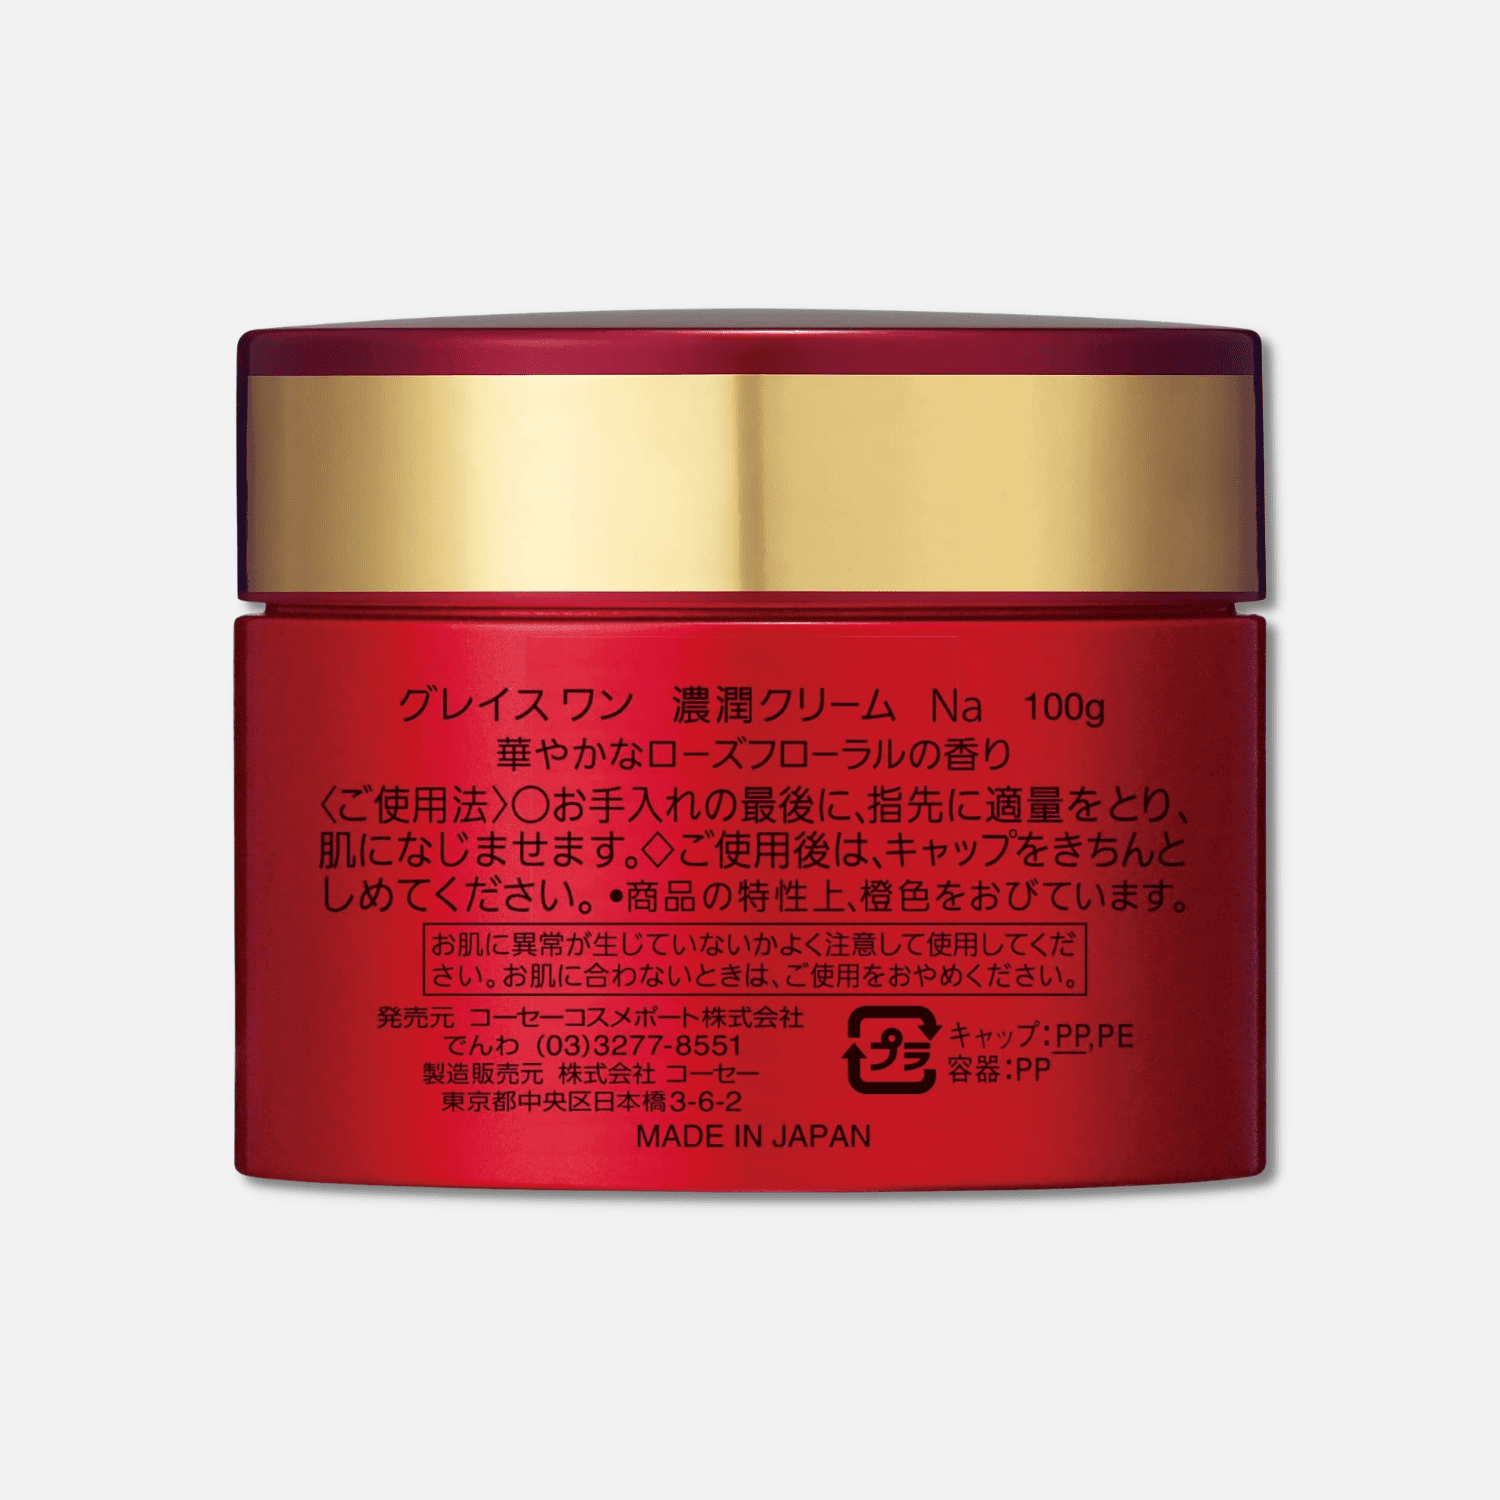 Kose Grace One Perfect Cream 100g - Buy Me Japan